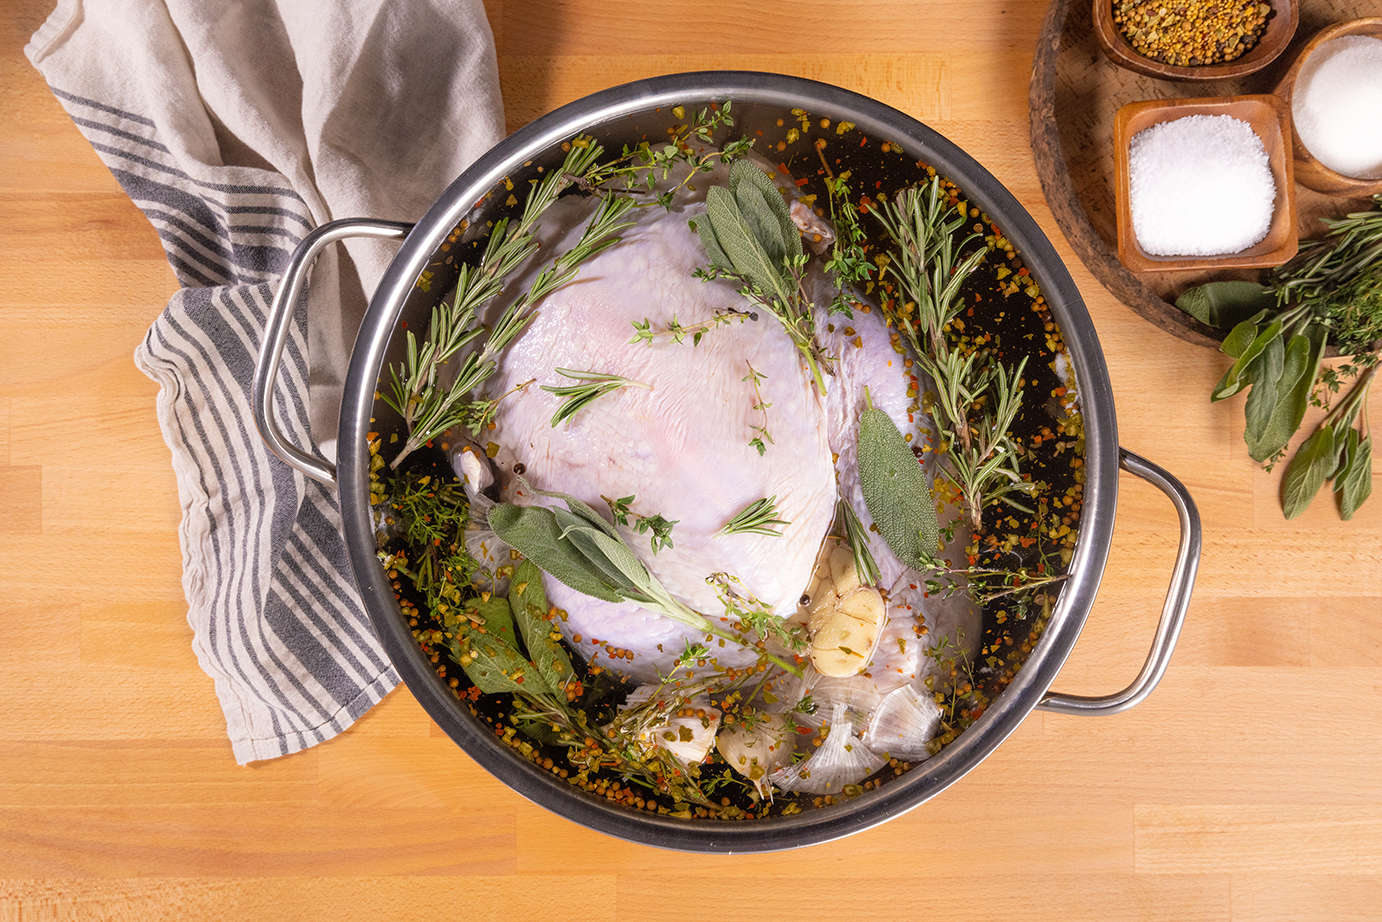 The 1-Ingredient Upgrade For A Better Turkey Brine